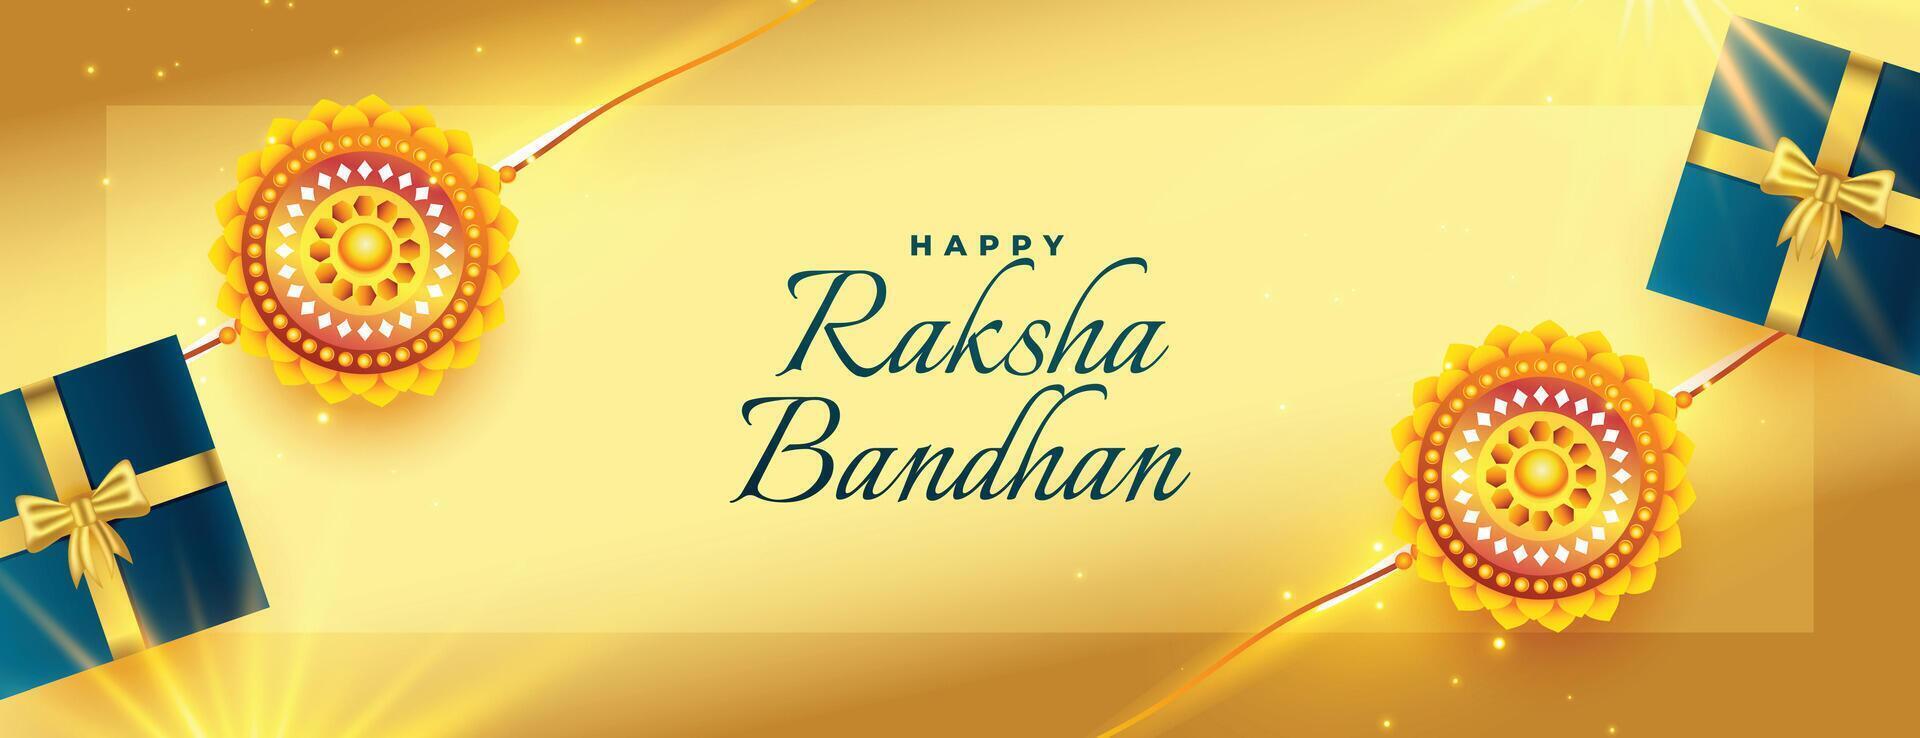 golden raksha bandhan greeting card design for brother and sister love vector